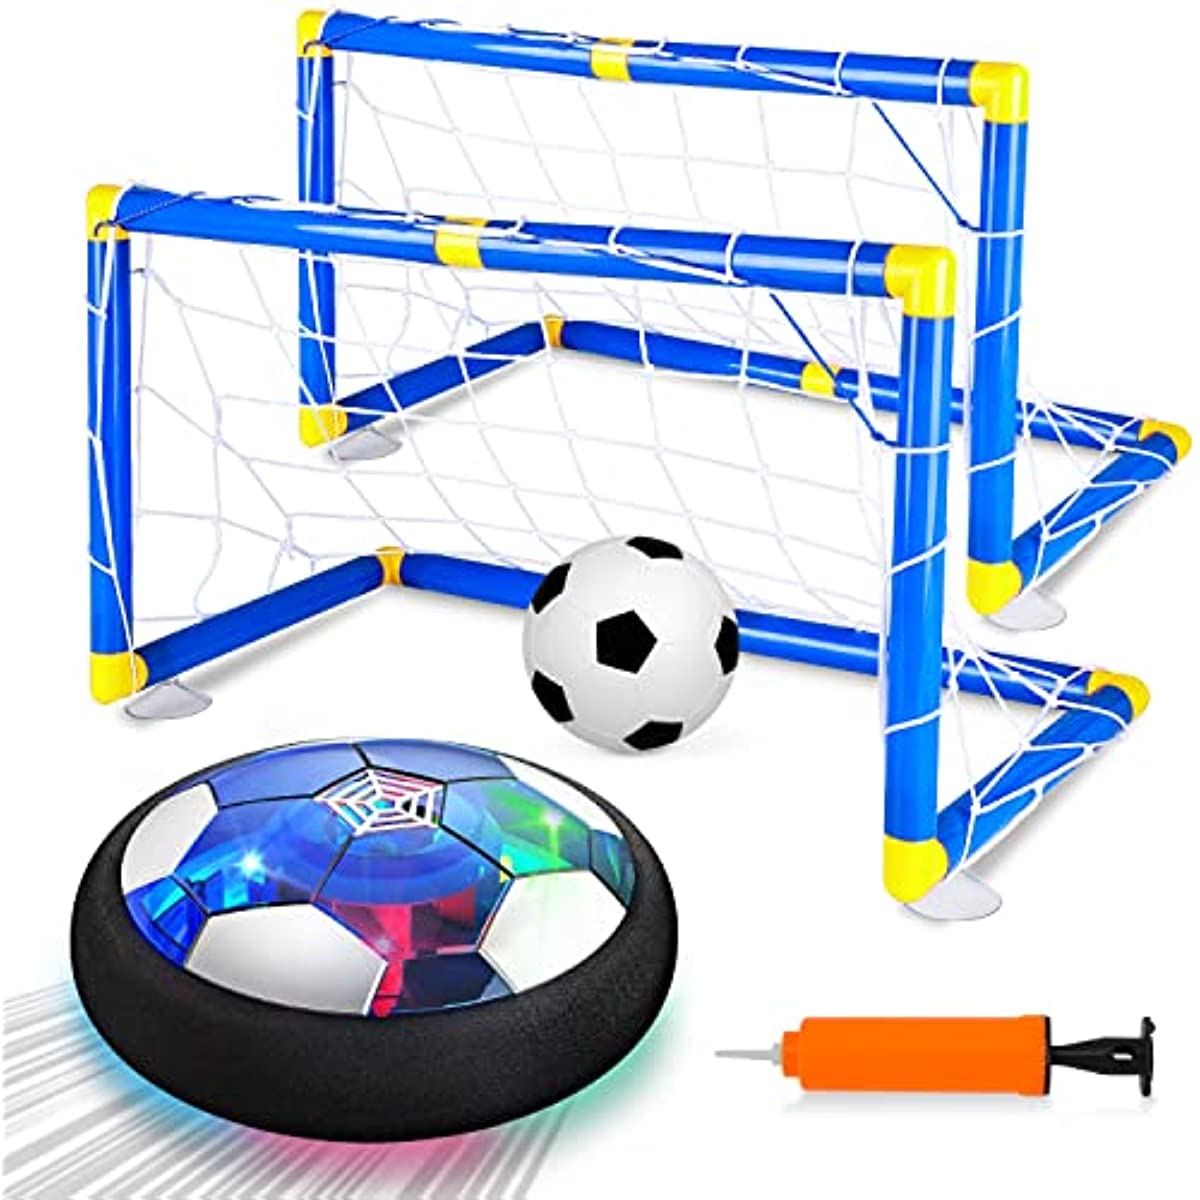 Toysery Hover Mini soccer goal set - kids soccer set - Comes with 2 Goals  with Net - kids soccer goal games – soccer ball set with two goals